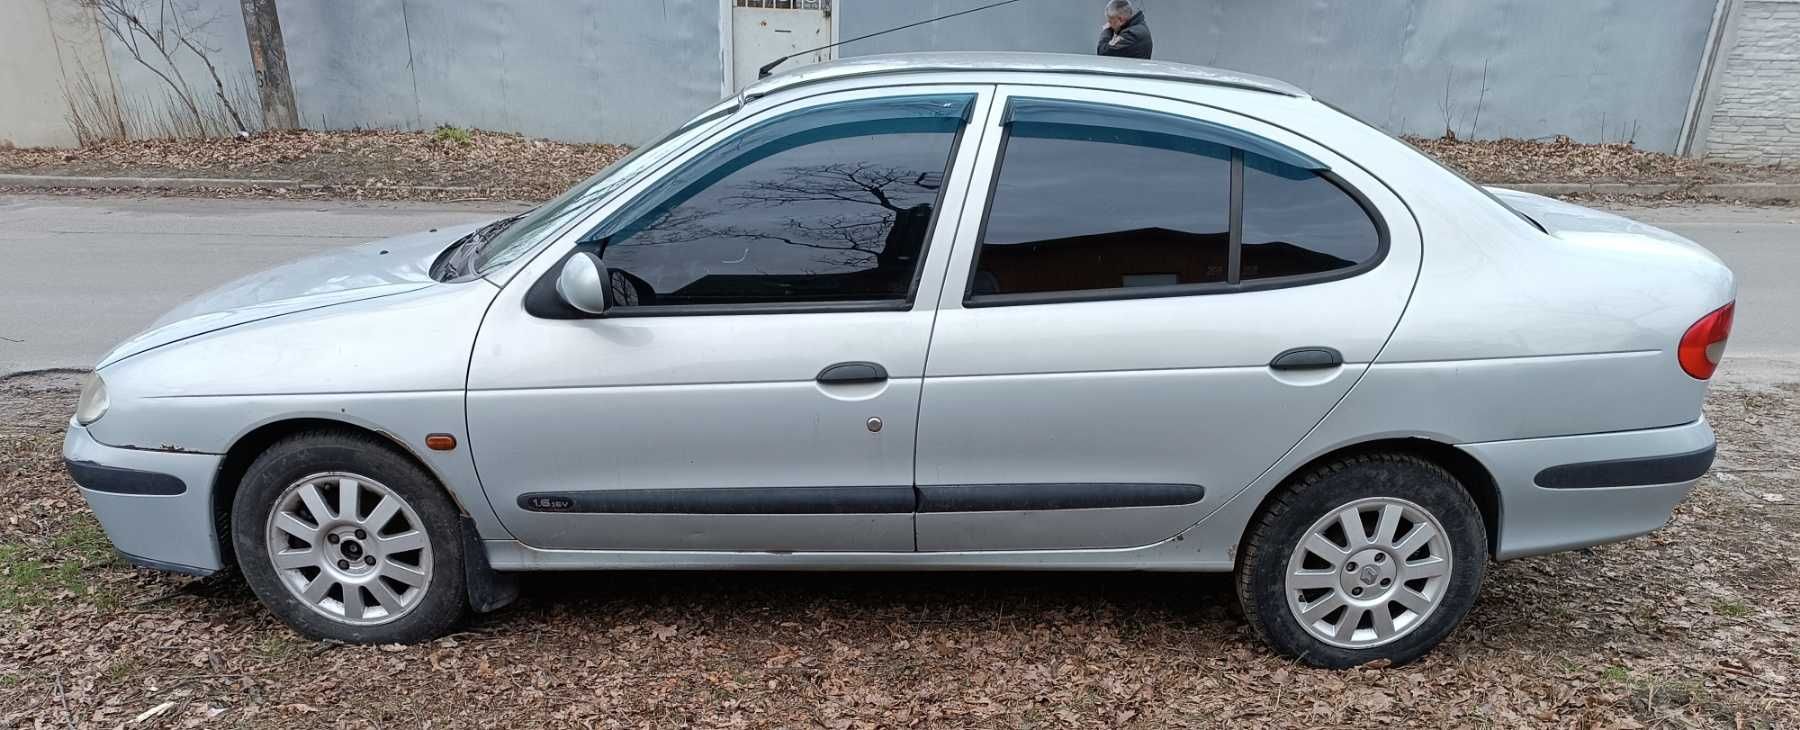 Продам Renault Megan 2003 АКПП